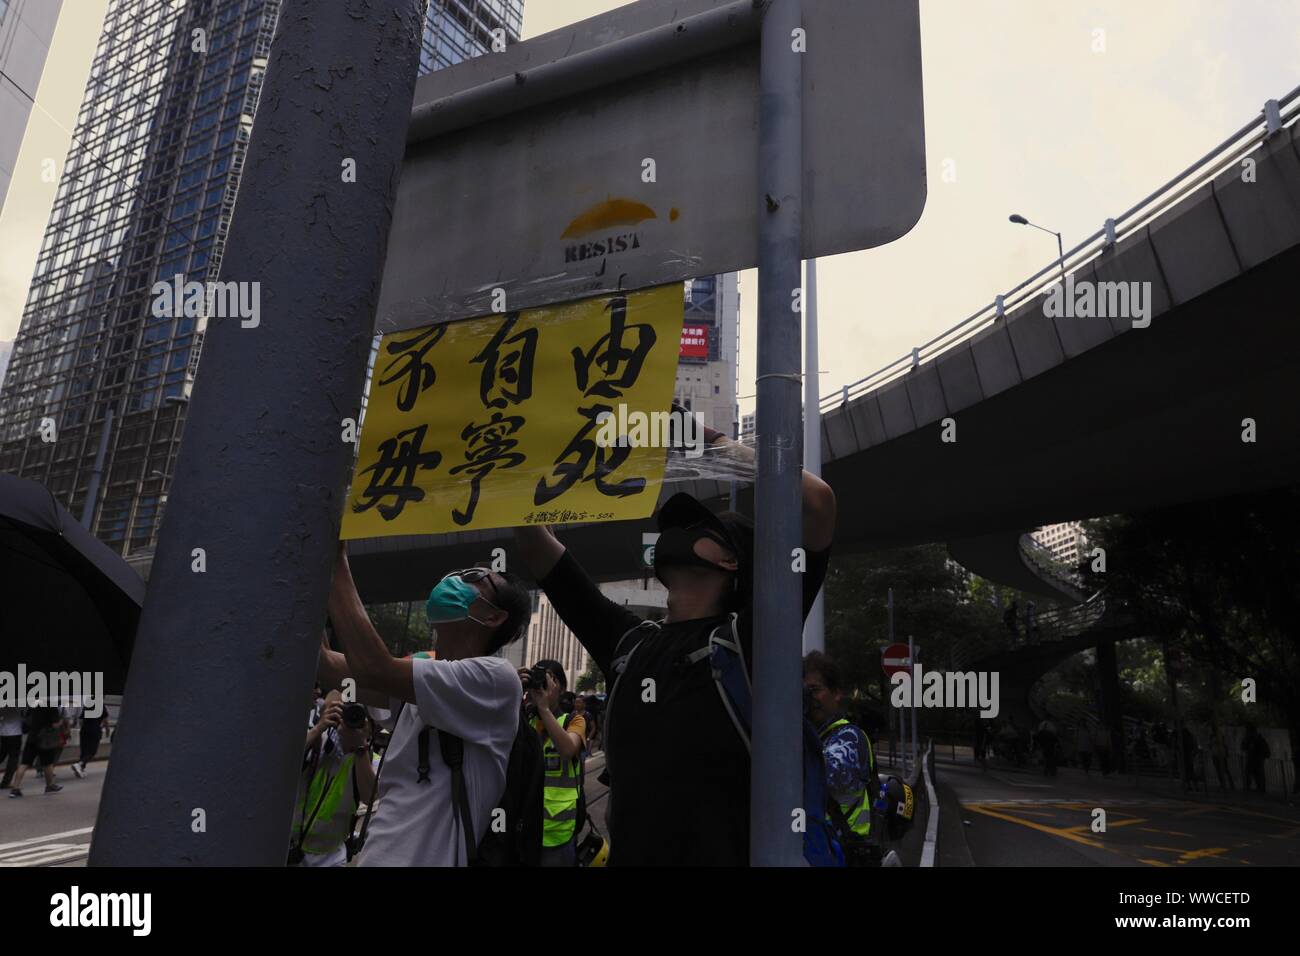 Hong Kong, China. 15 Sep, 2019. Los manifestantes son vistos aquí tratando de pegar la etiqueta que lee y morir, SI NO GRATUITA en un cartel durante una marcha de protesta el domingo.sept-15, 2019 Hong Kong.ZUMA/Liau Chung-ren Crédito: Liau Chung-ren/Zuma alambre/Alamy Live News Foto de stock